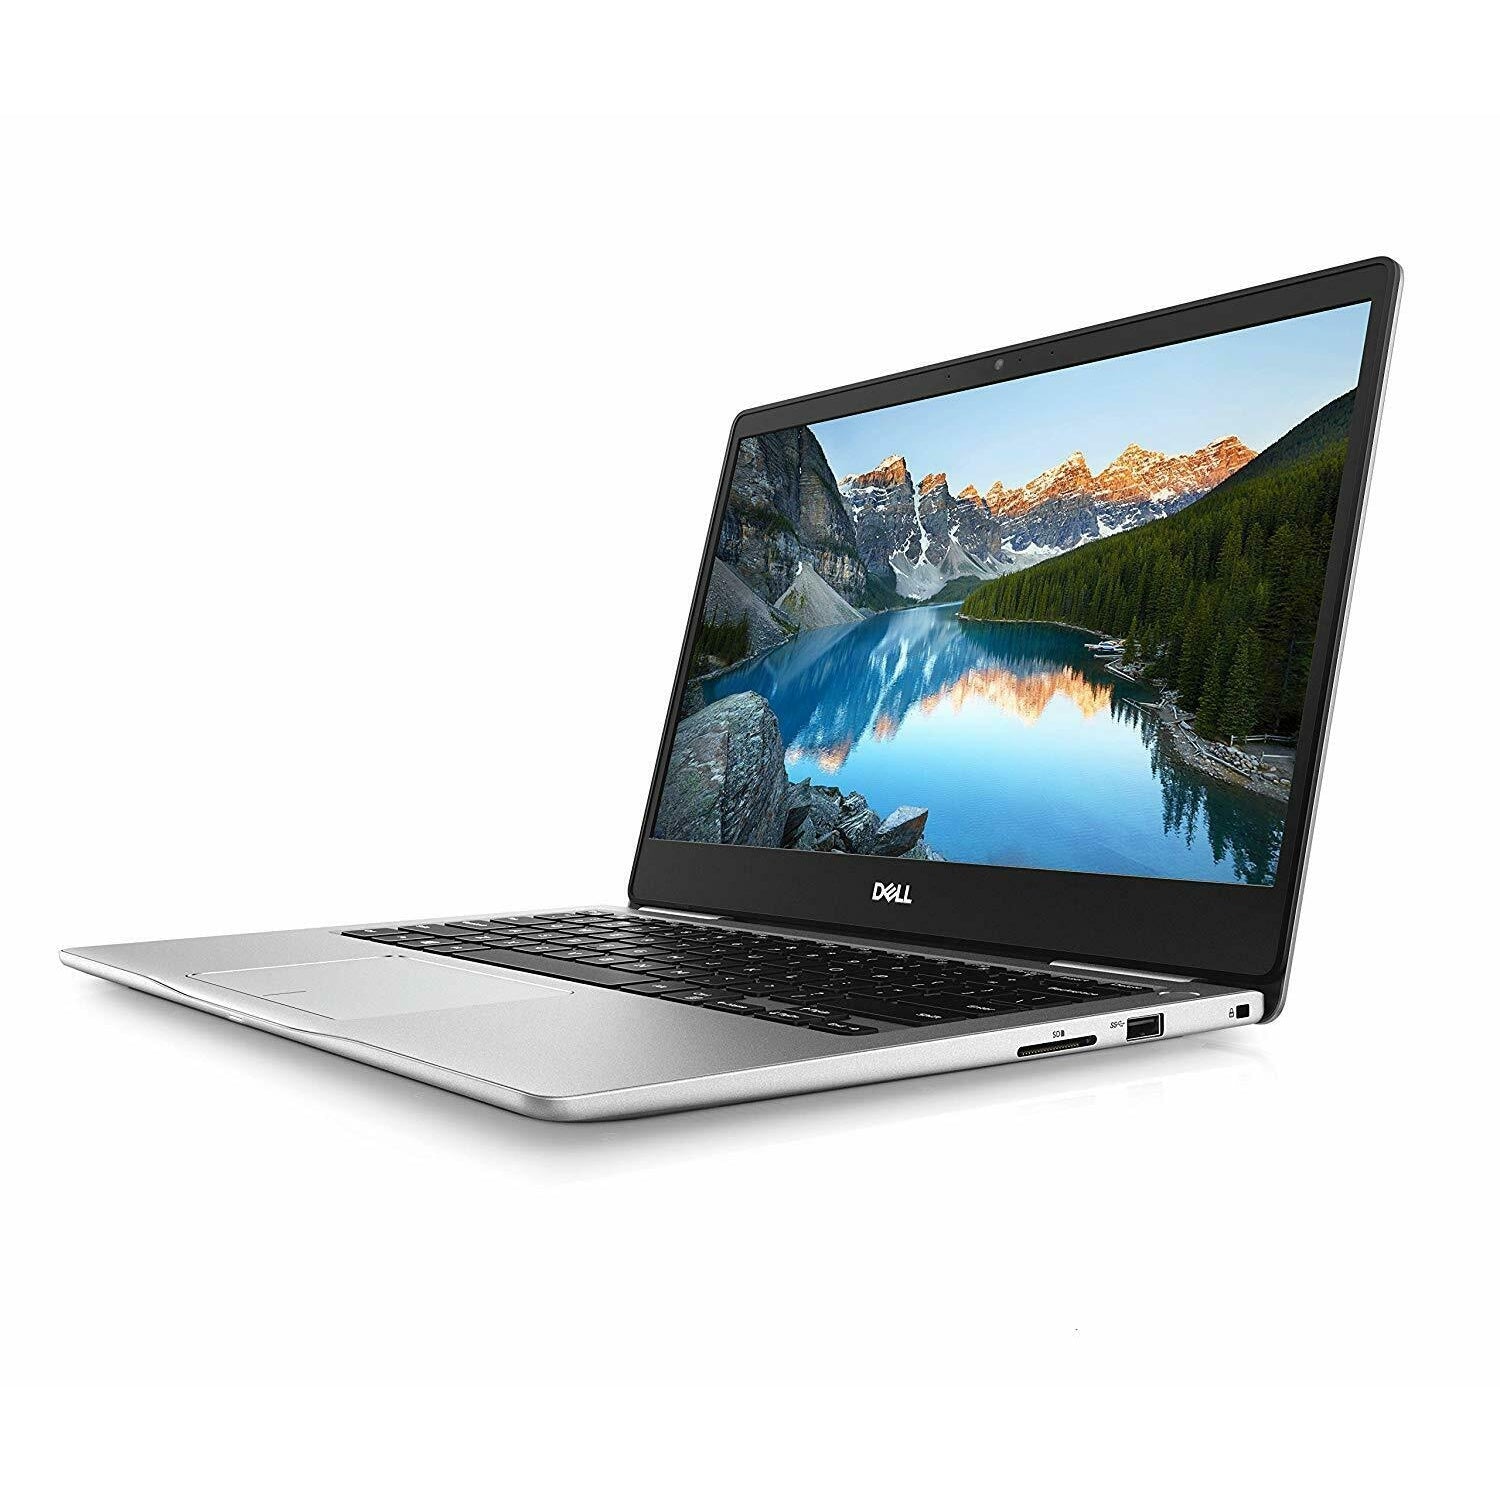 Dell Inspiron 13 7380 Laptop, Intel Core i7, 16GB RAM, 512GB SSD, 13.3” Full HD, Silver - Refurbished Pristine